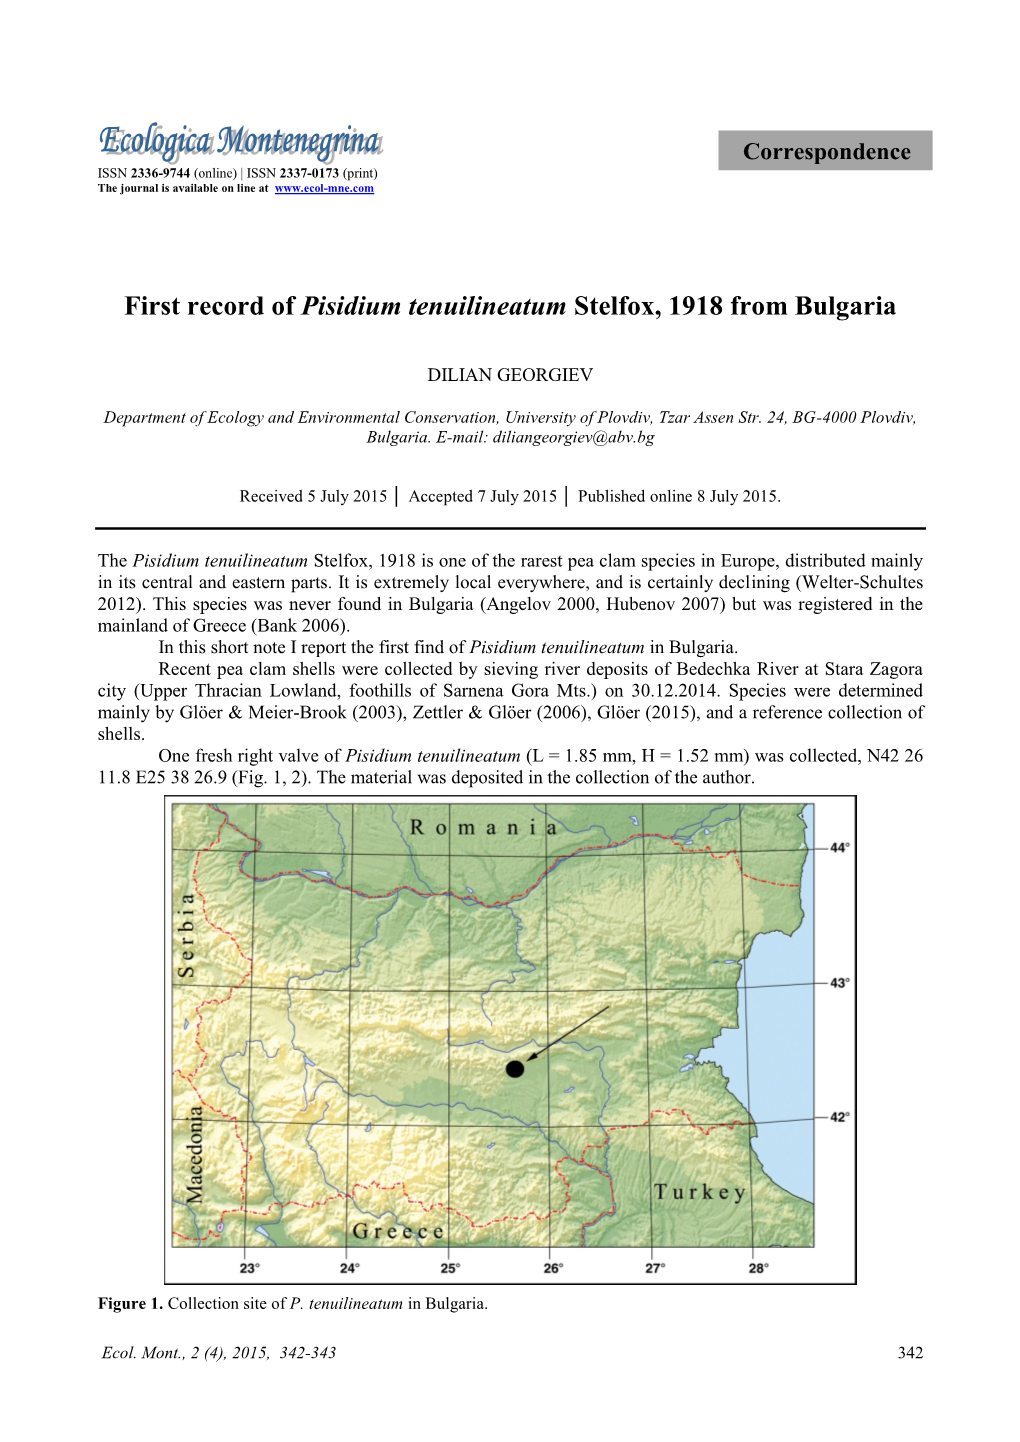 First Record of Pisidium Tenuilineatum Stelfox, 1918 from Bulgaria